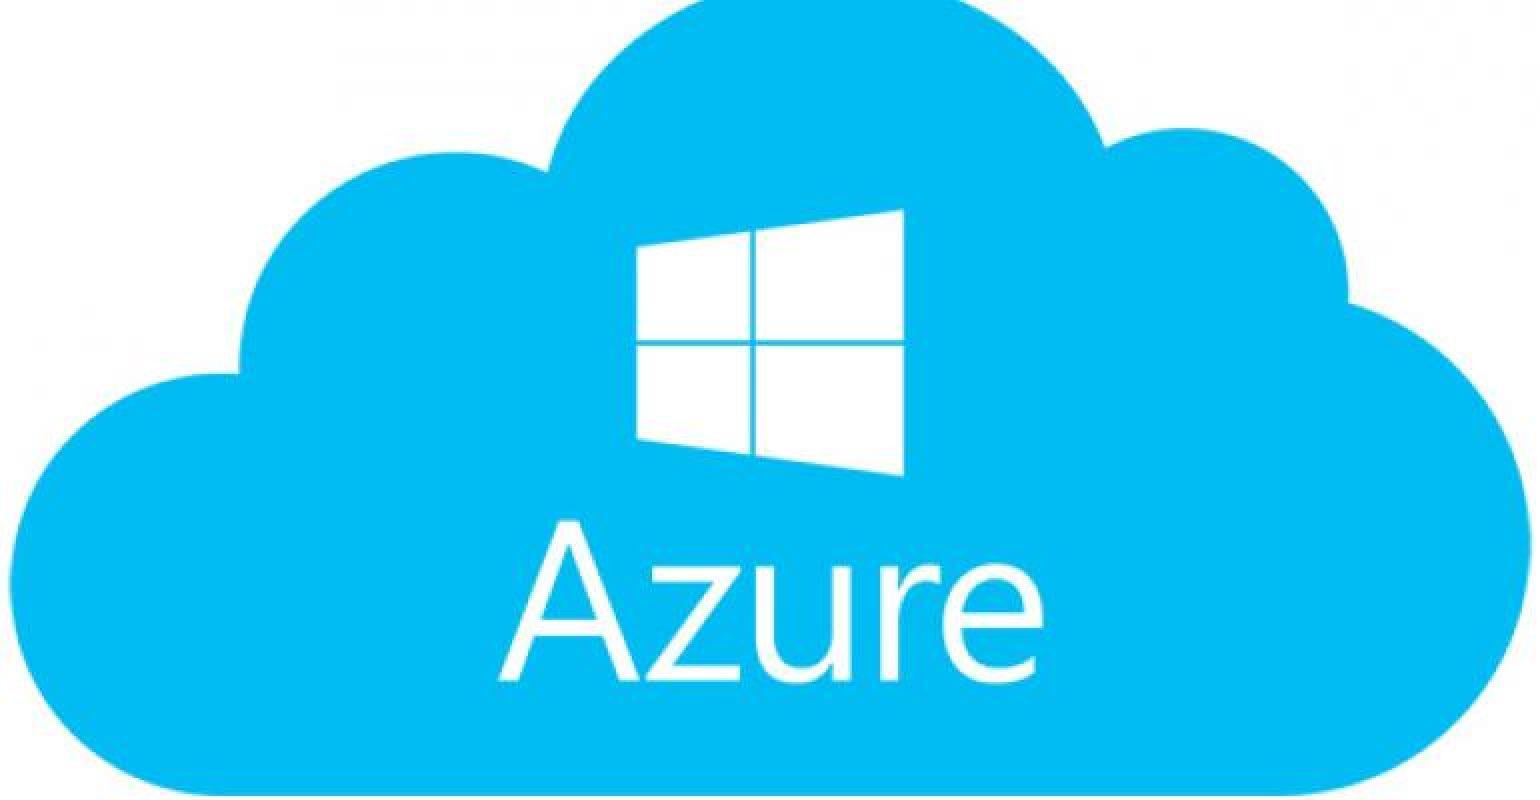 4 Weeks Microsoft Azure training for Beginners in Long Island | Microsoft Azure Fundamentals | Azure cloud computing training | Microsoft Azure Fundamentals AZ-900 Certification Exam Prep (Preparation) Training Course